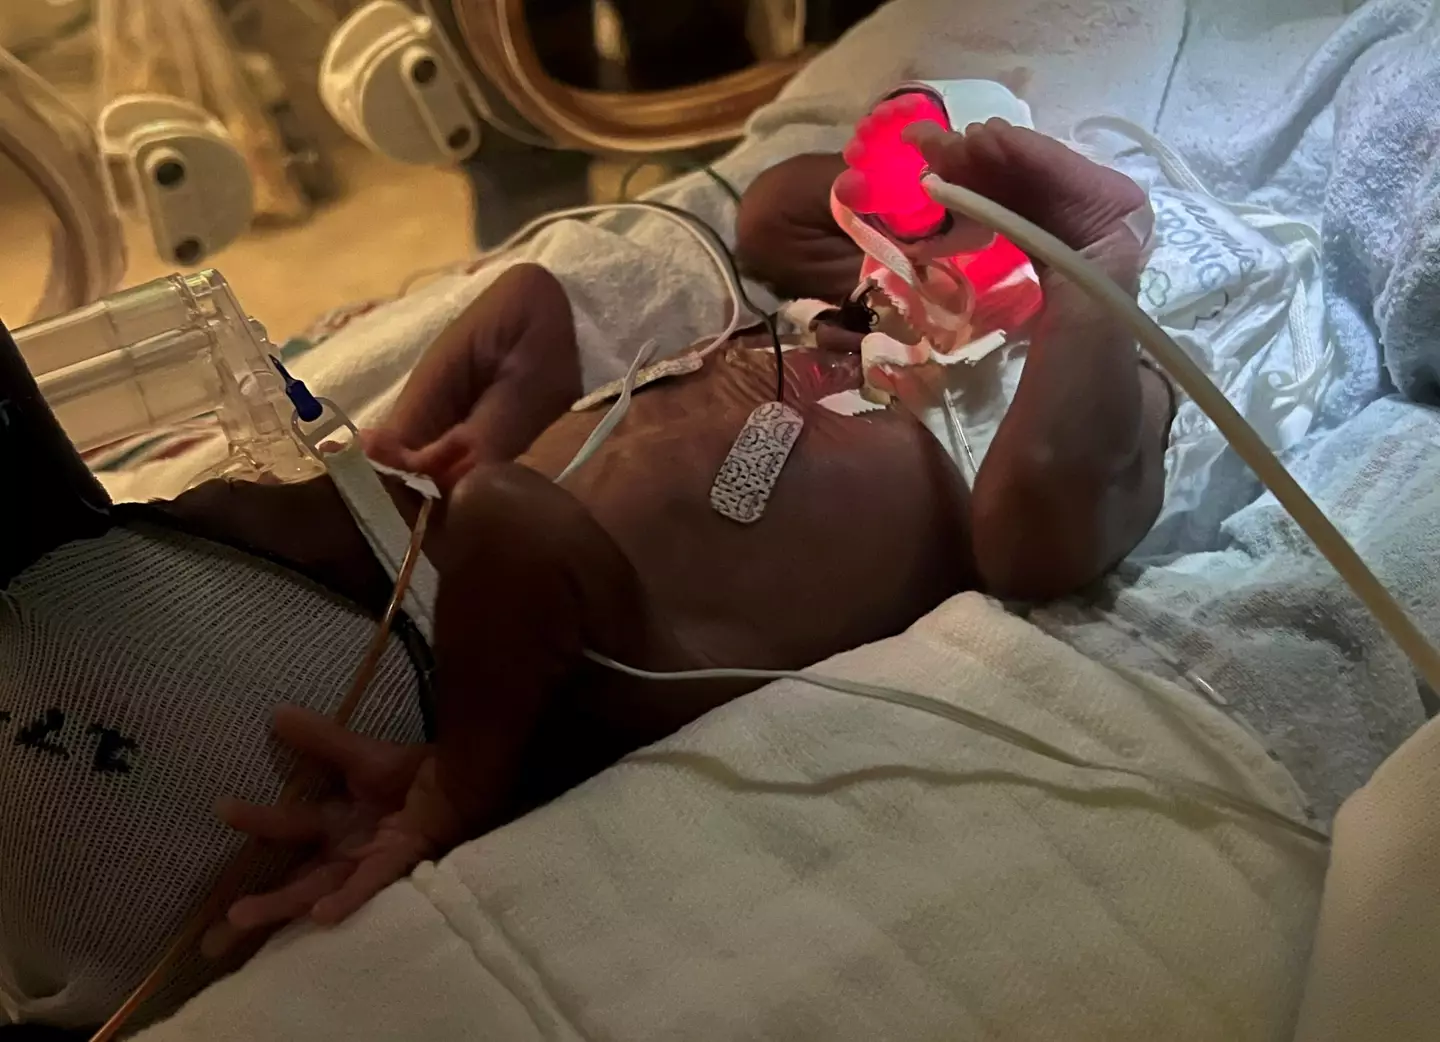 Saniah's son was born 14 weeks earlier than expected.